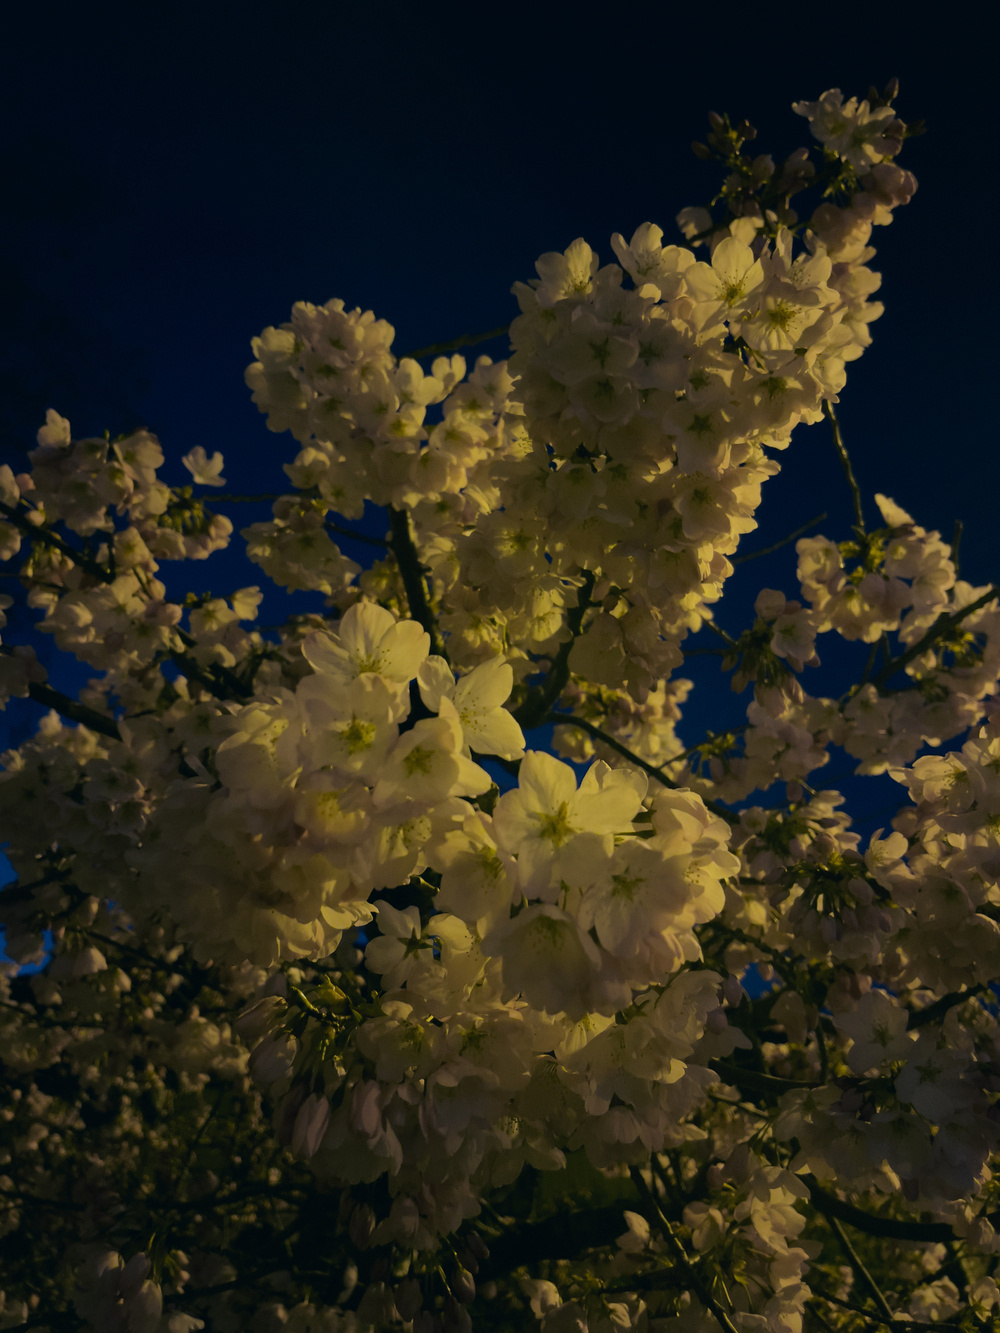 Flowers on a tree illuminated by street lighting against a dark sky.